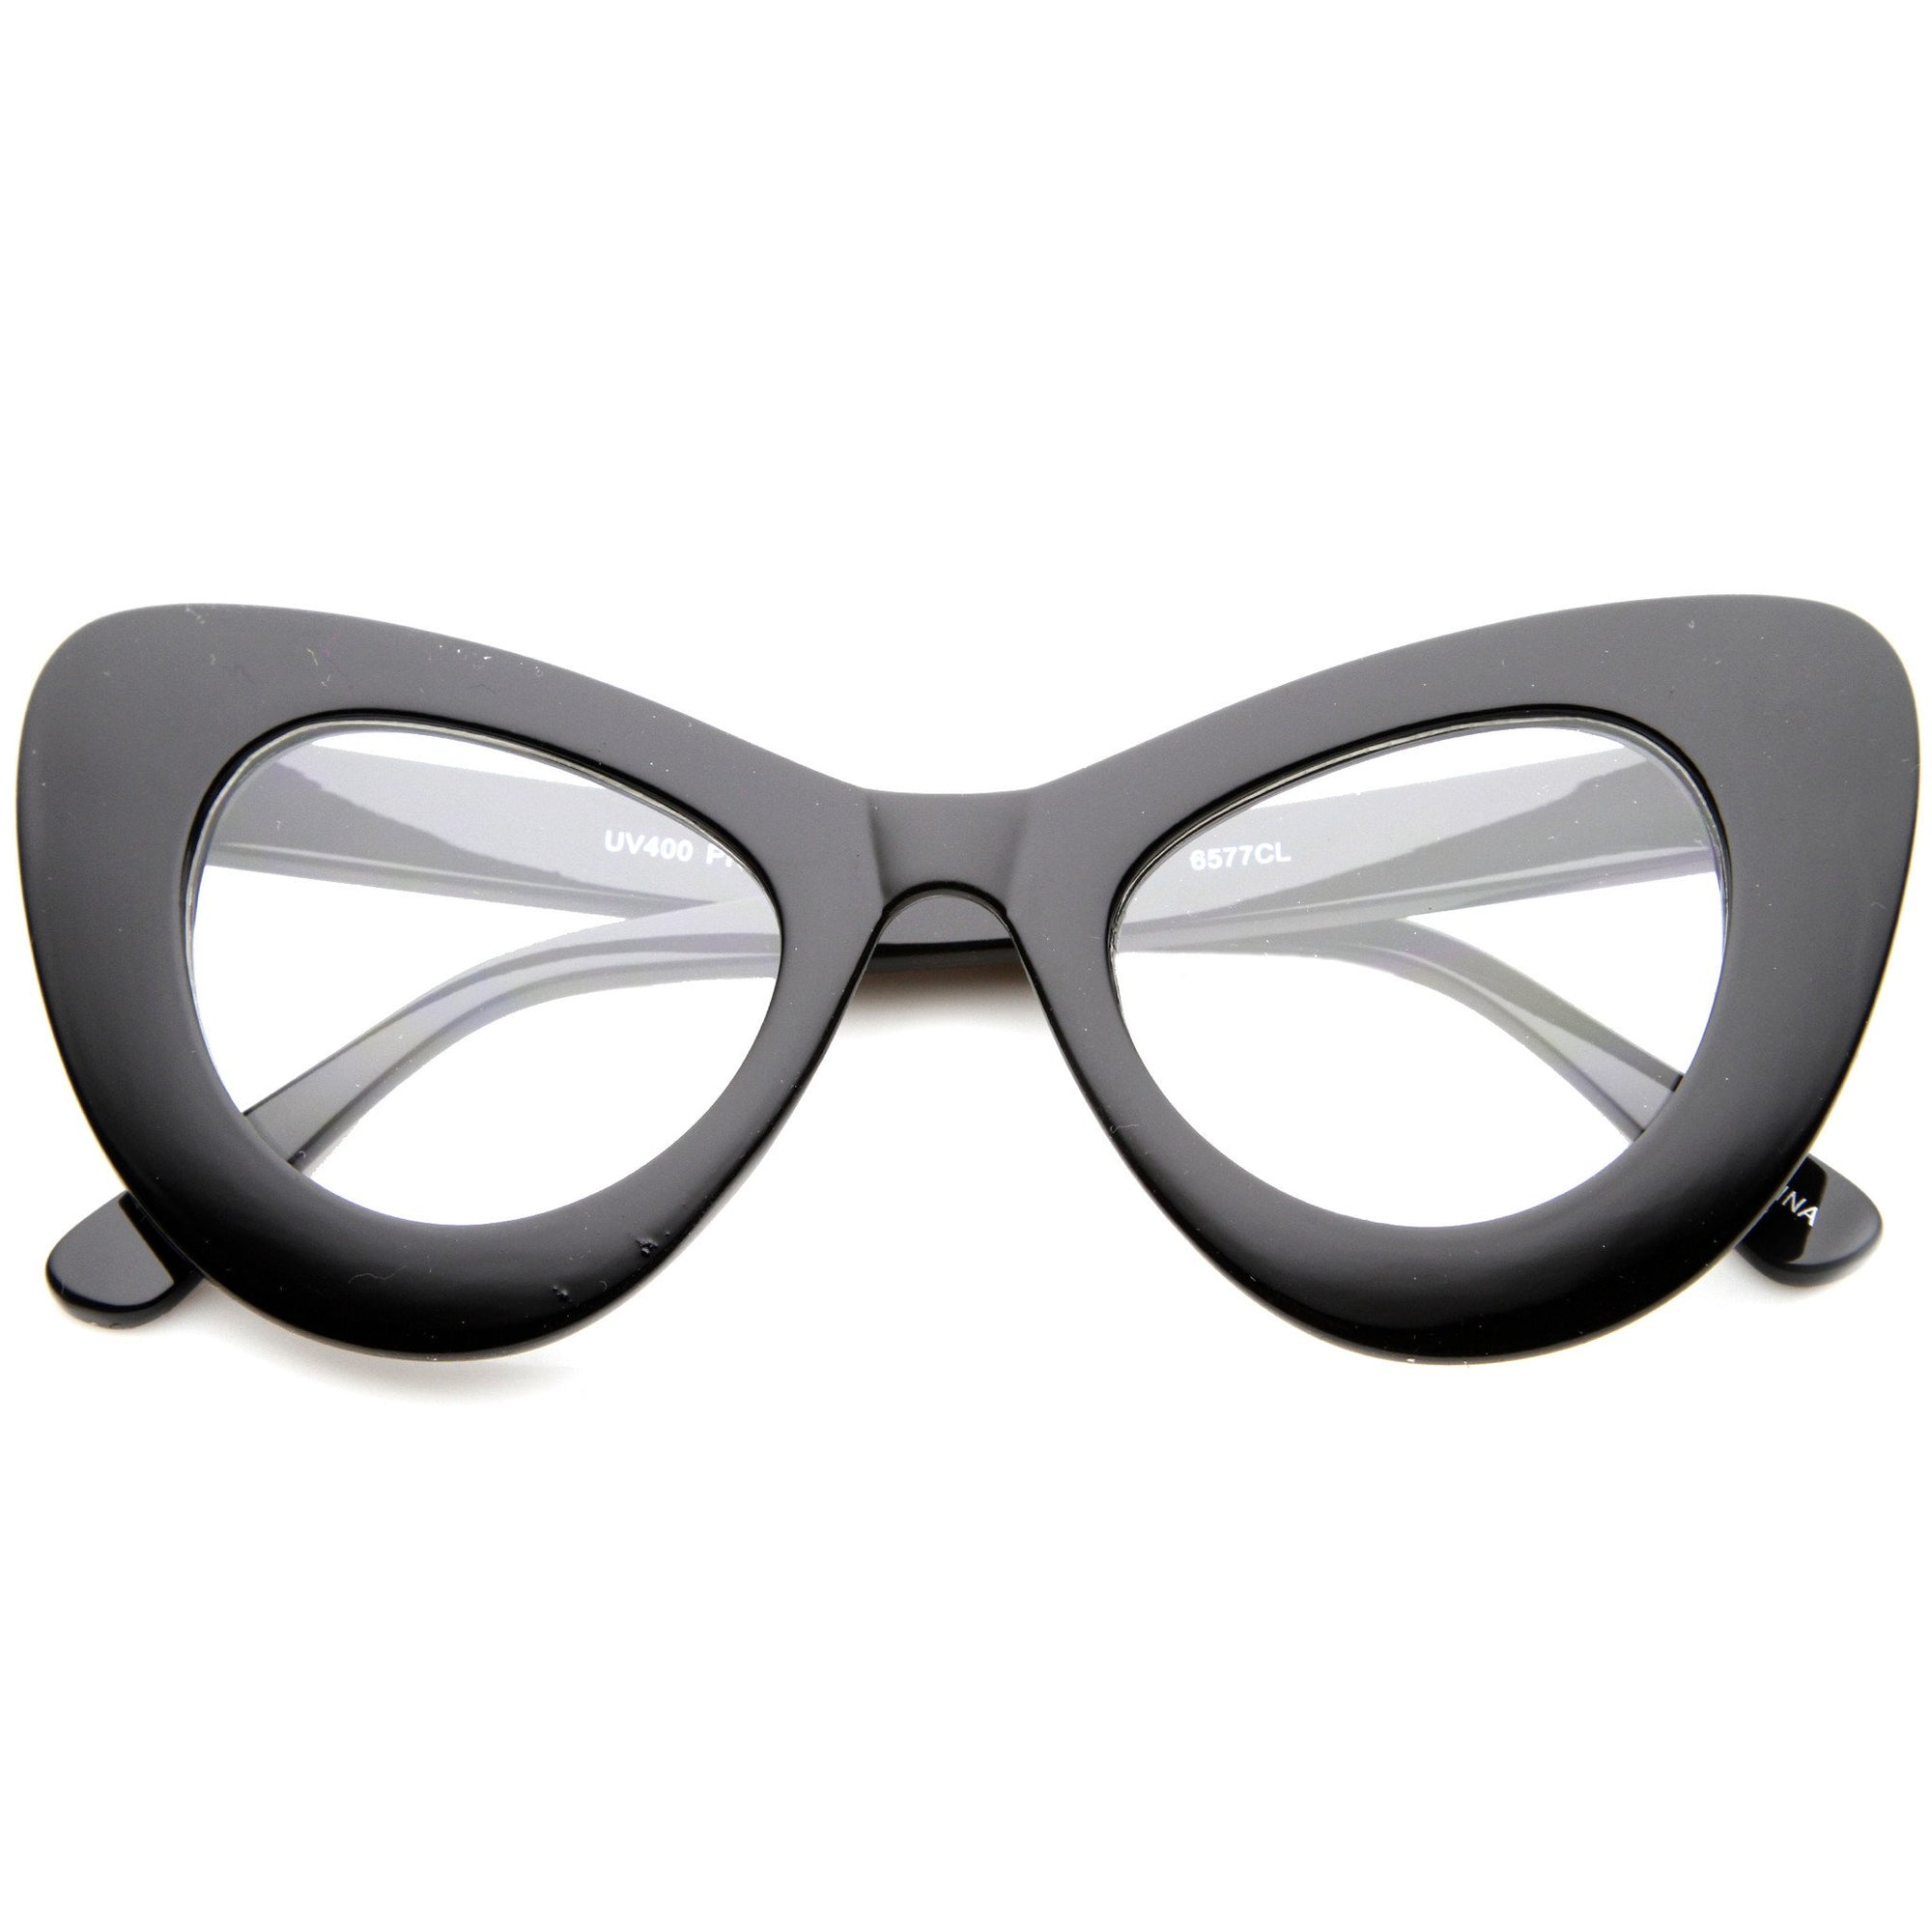 Women's Retro Oversize Clear Lens Cat Eye Glasses - zeroUV